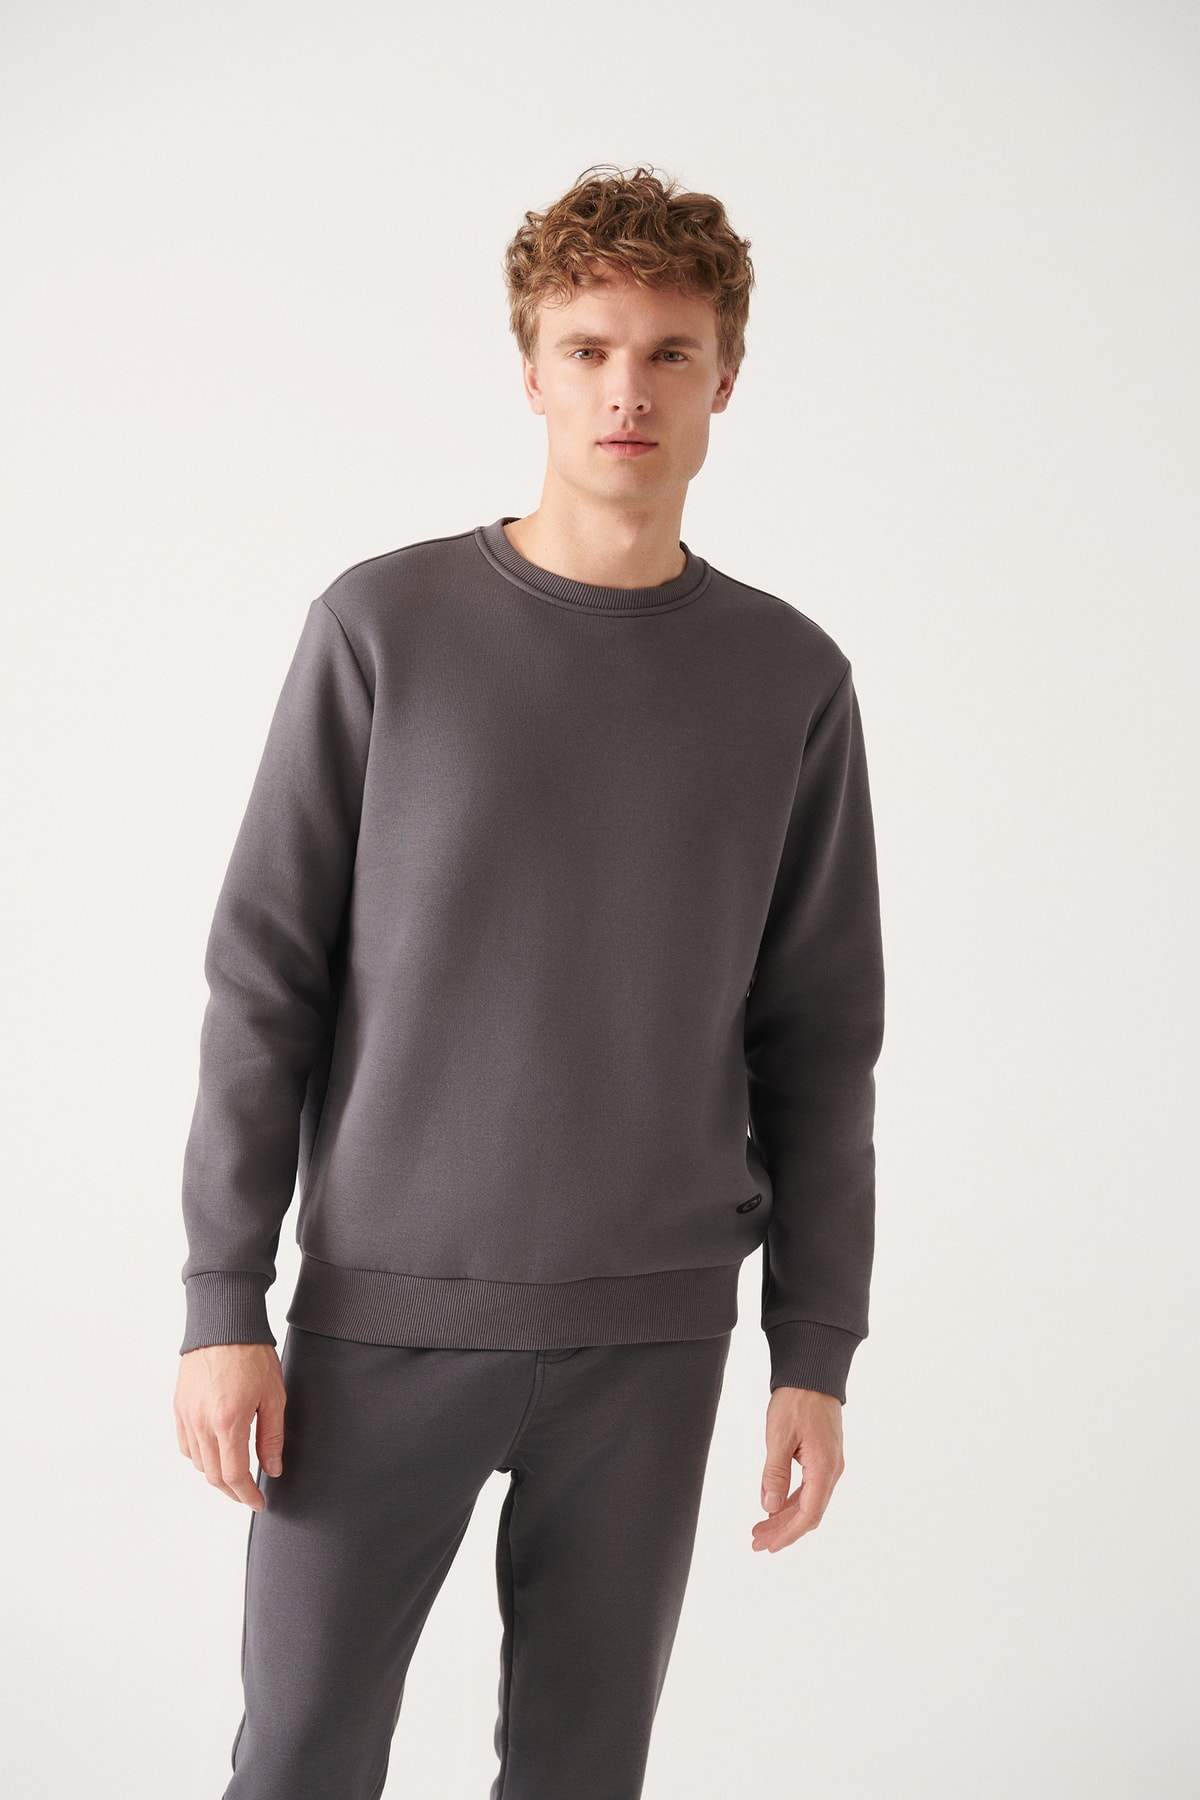 anthracite-crew-neck-3-thread-cotton-unisex-sweatshirt-with-fleece-inside